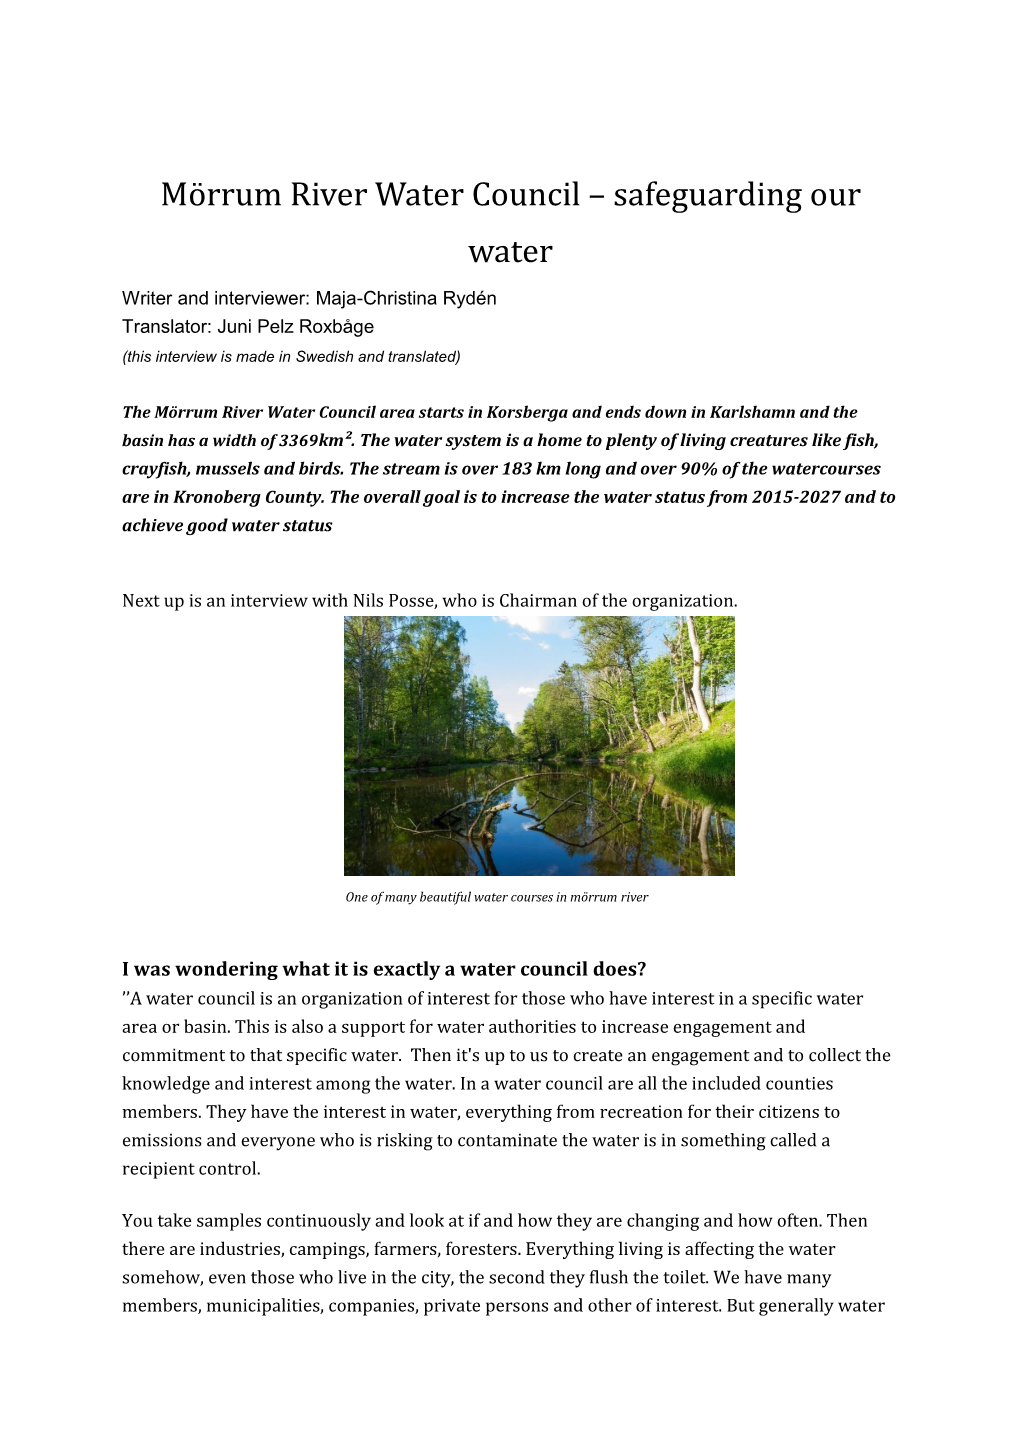 Mörrum River Water Council – Safeguarding Our Water